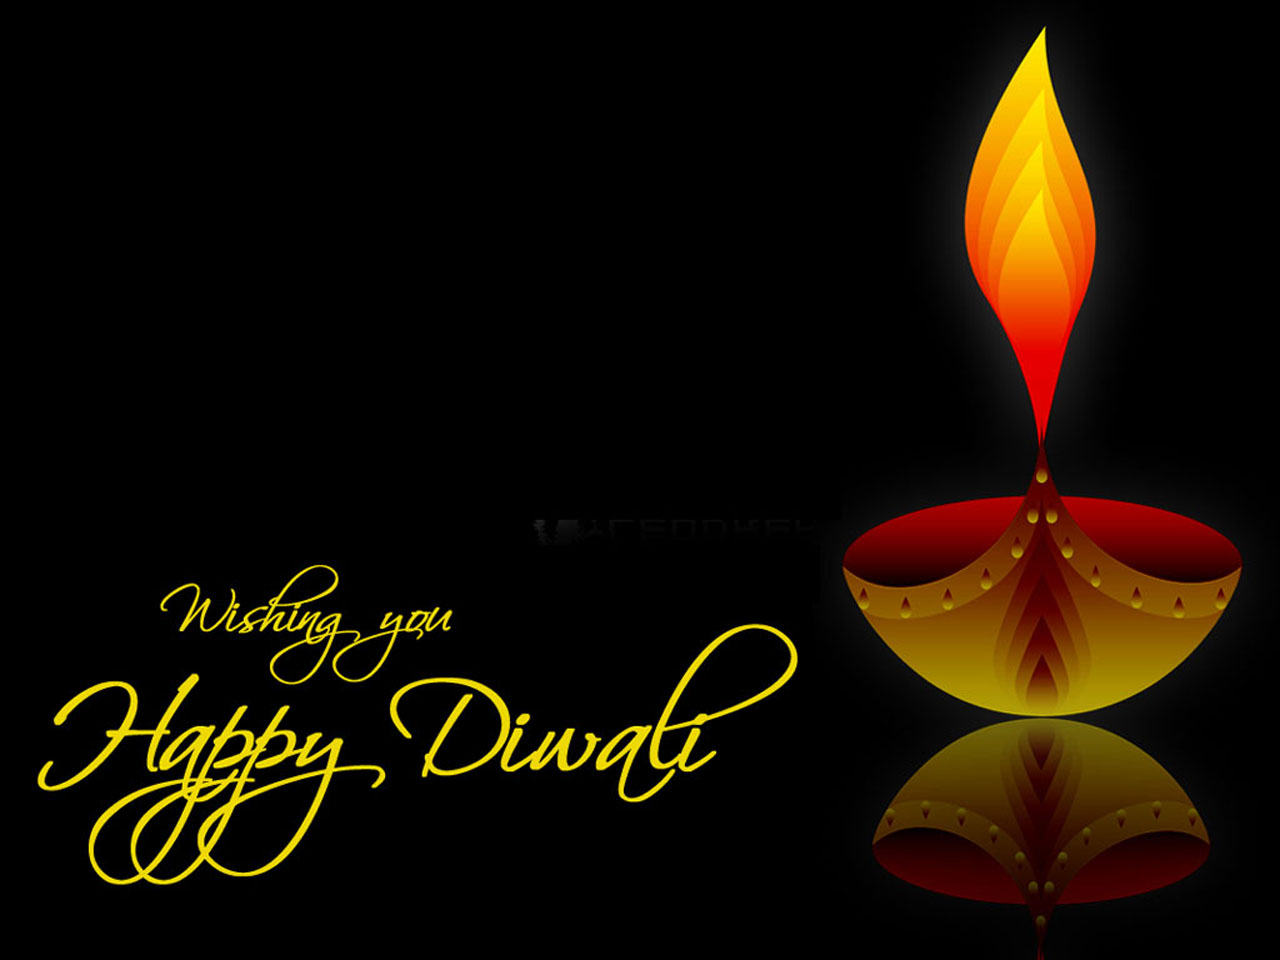 Free Diwali 2018, Diwali Lights, Candle Background Images, Diwali Festival  Fireworks Celebration Background Photo Background PNG and Vectors | Happy  diwali images, Diwali wallpaper, Diwali poster